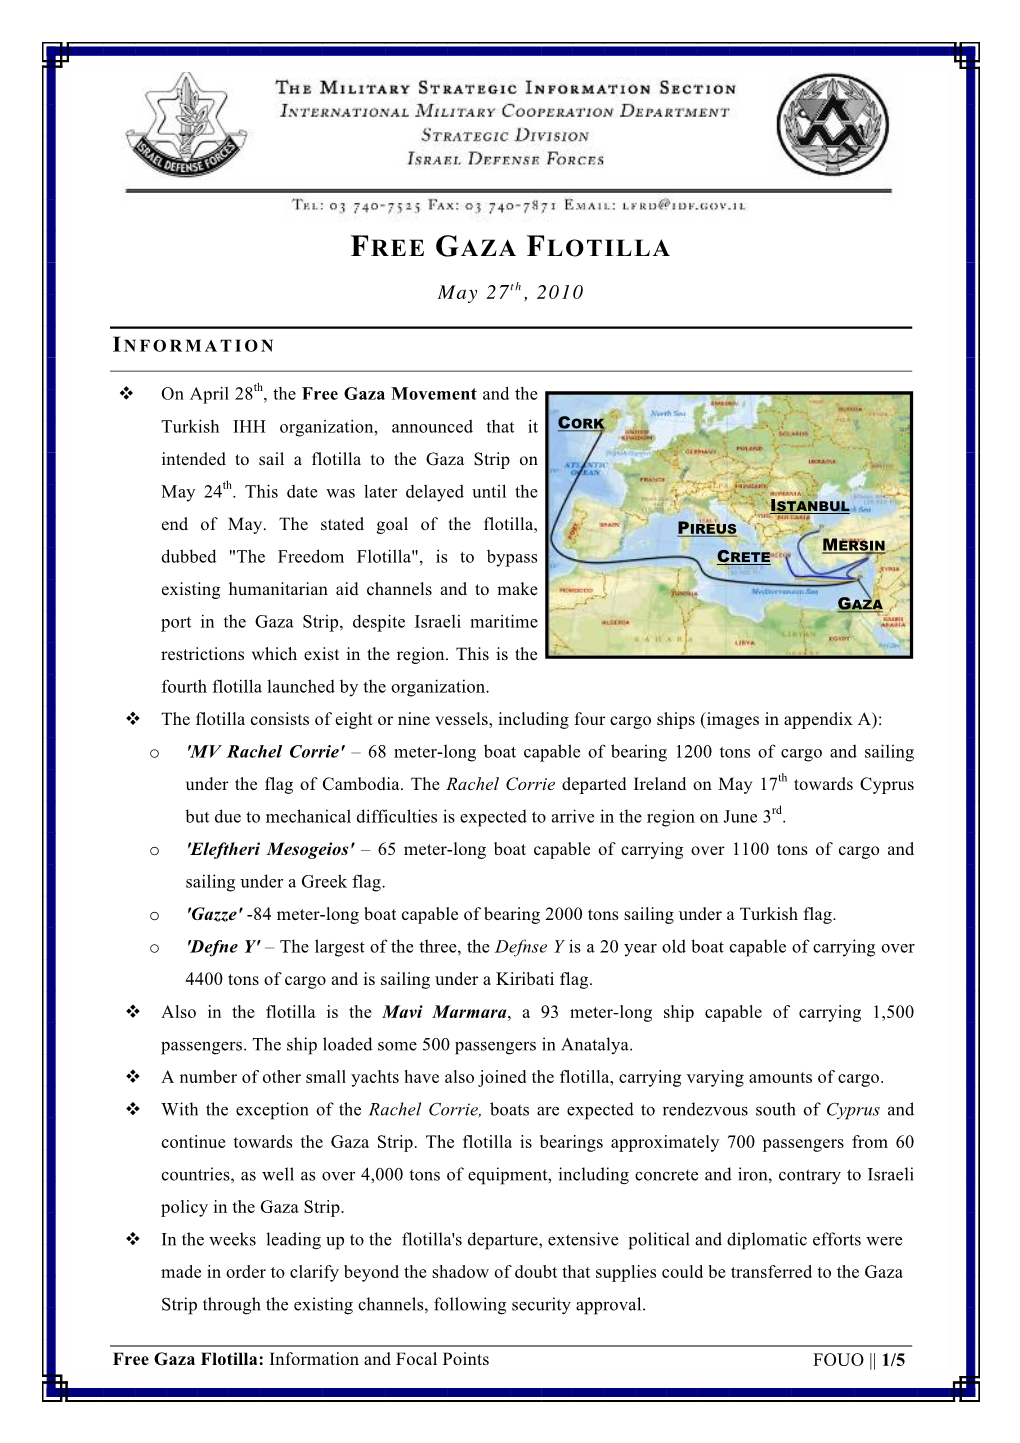 Free Gaza Flotilla